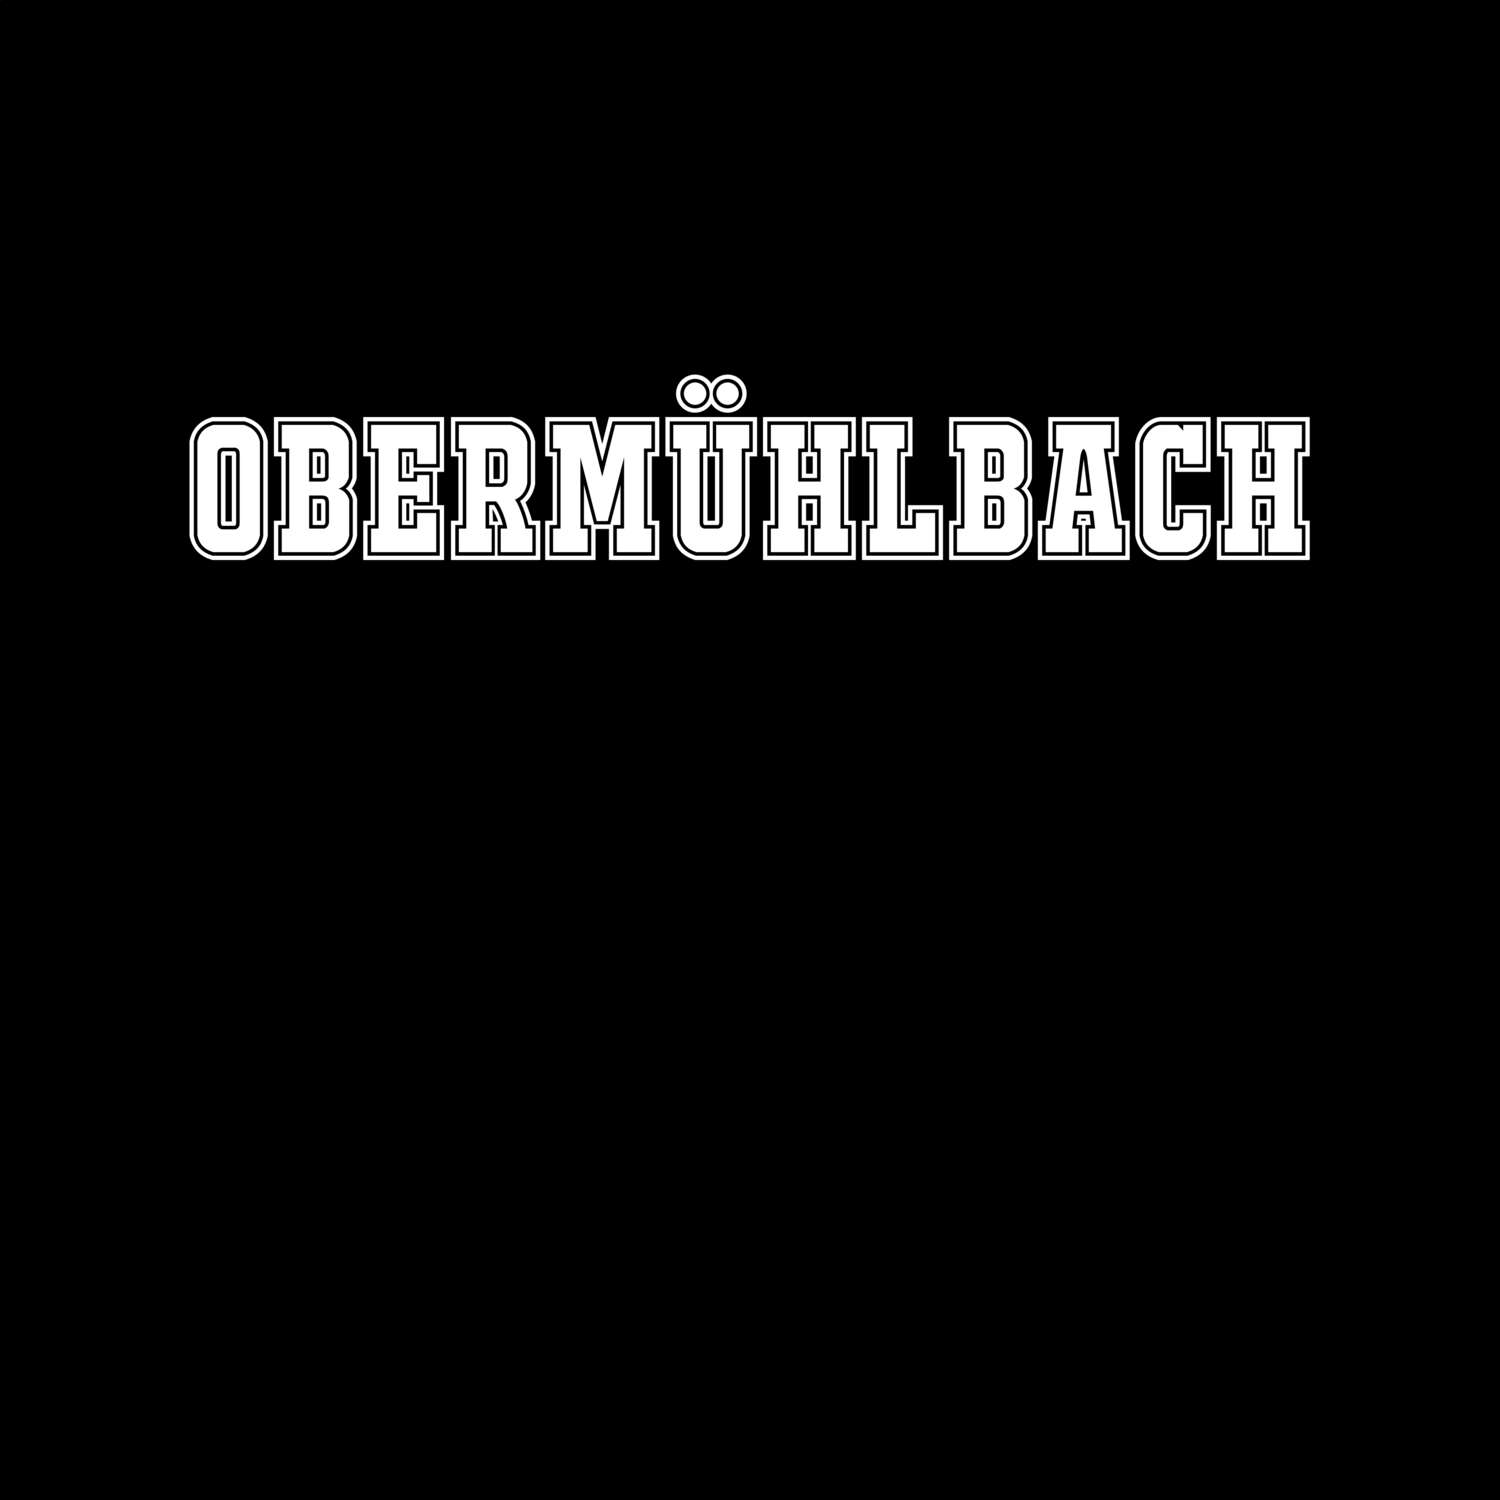 Obermühlbach T-Shirt »Classic«